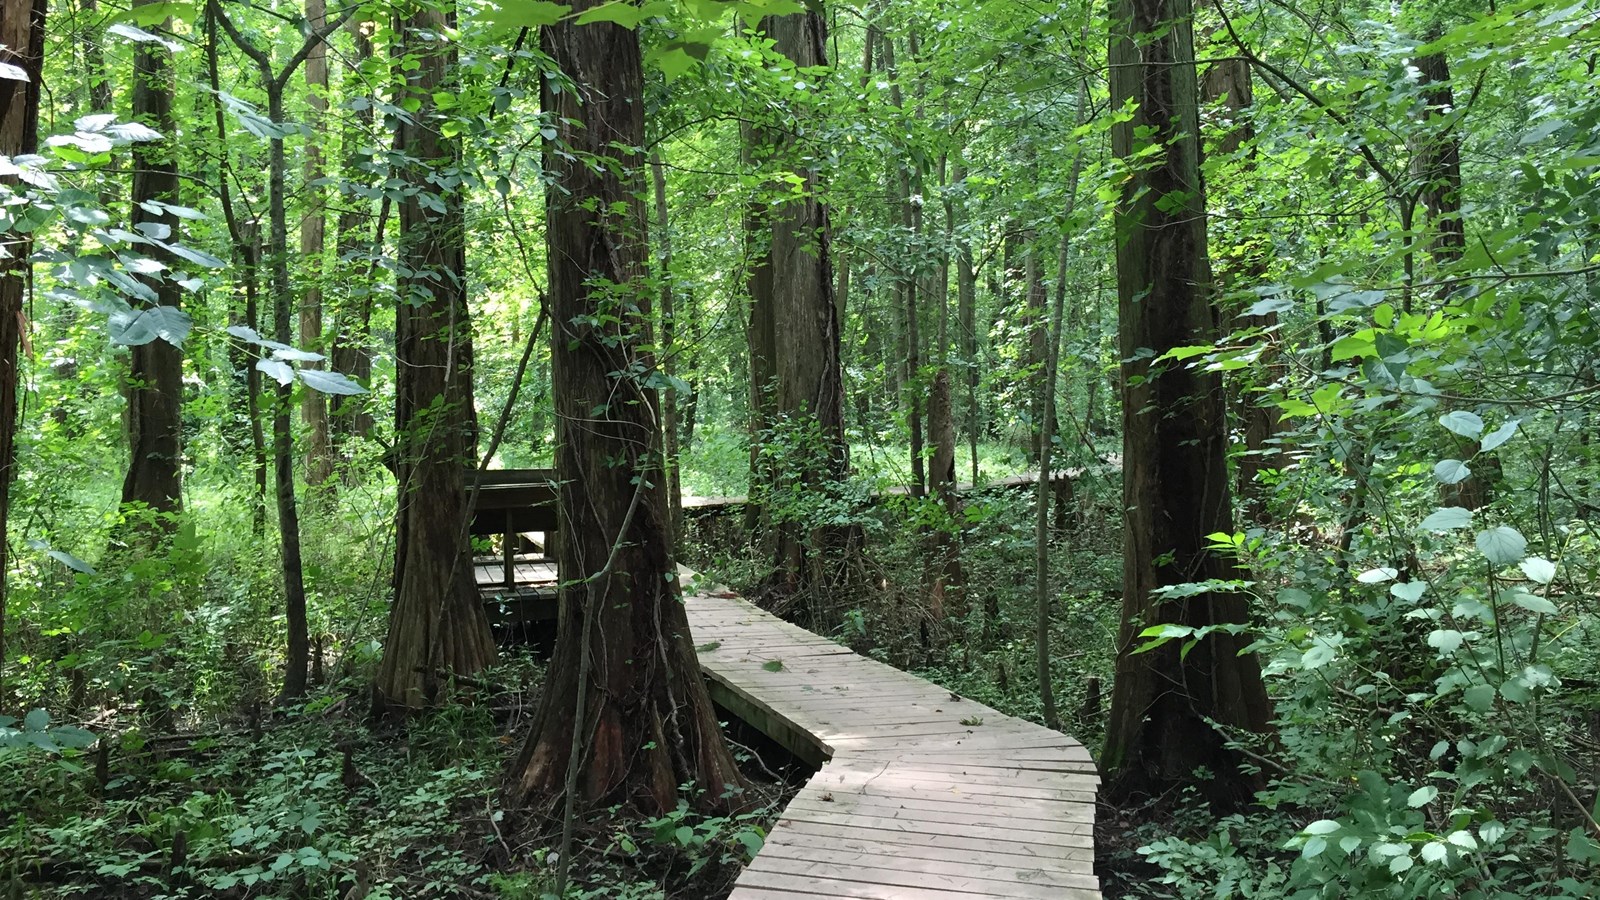 Wooden boardwalk in a lush green forest